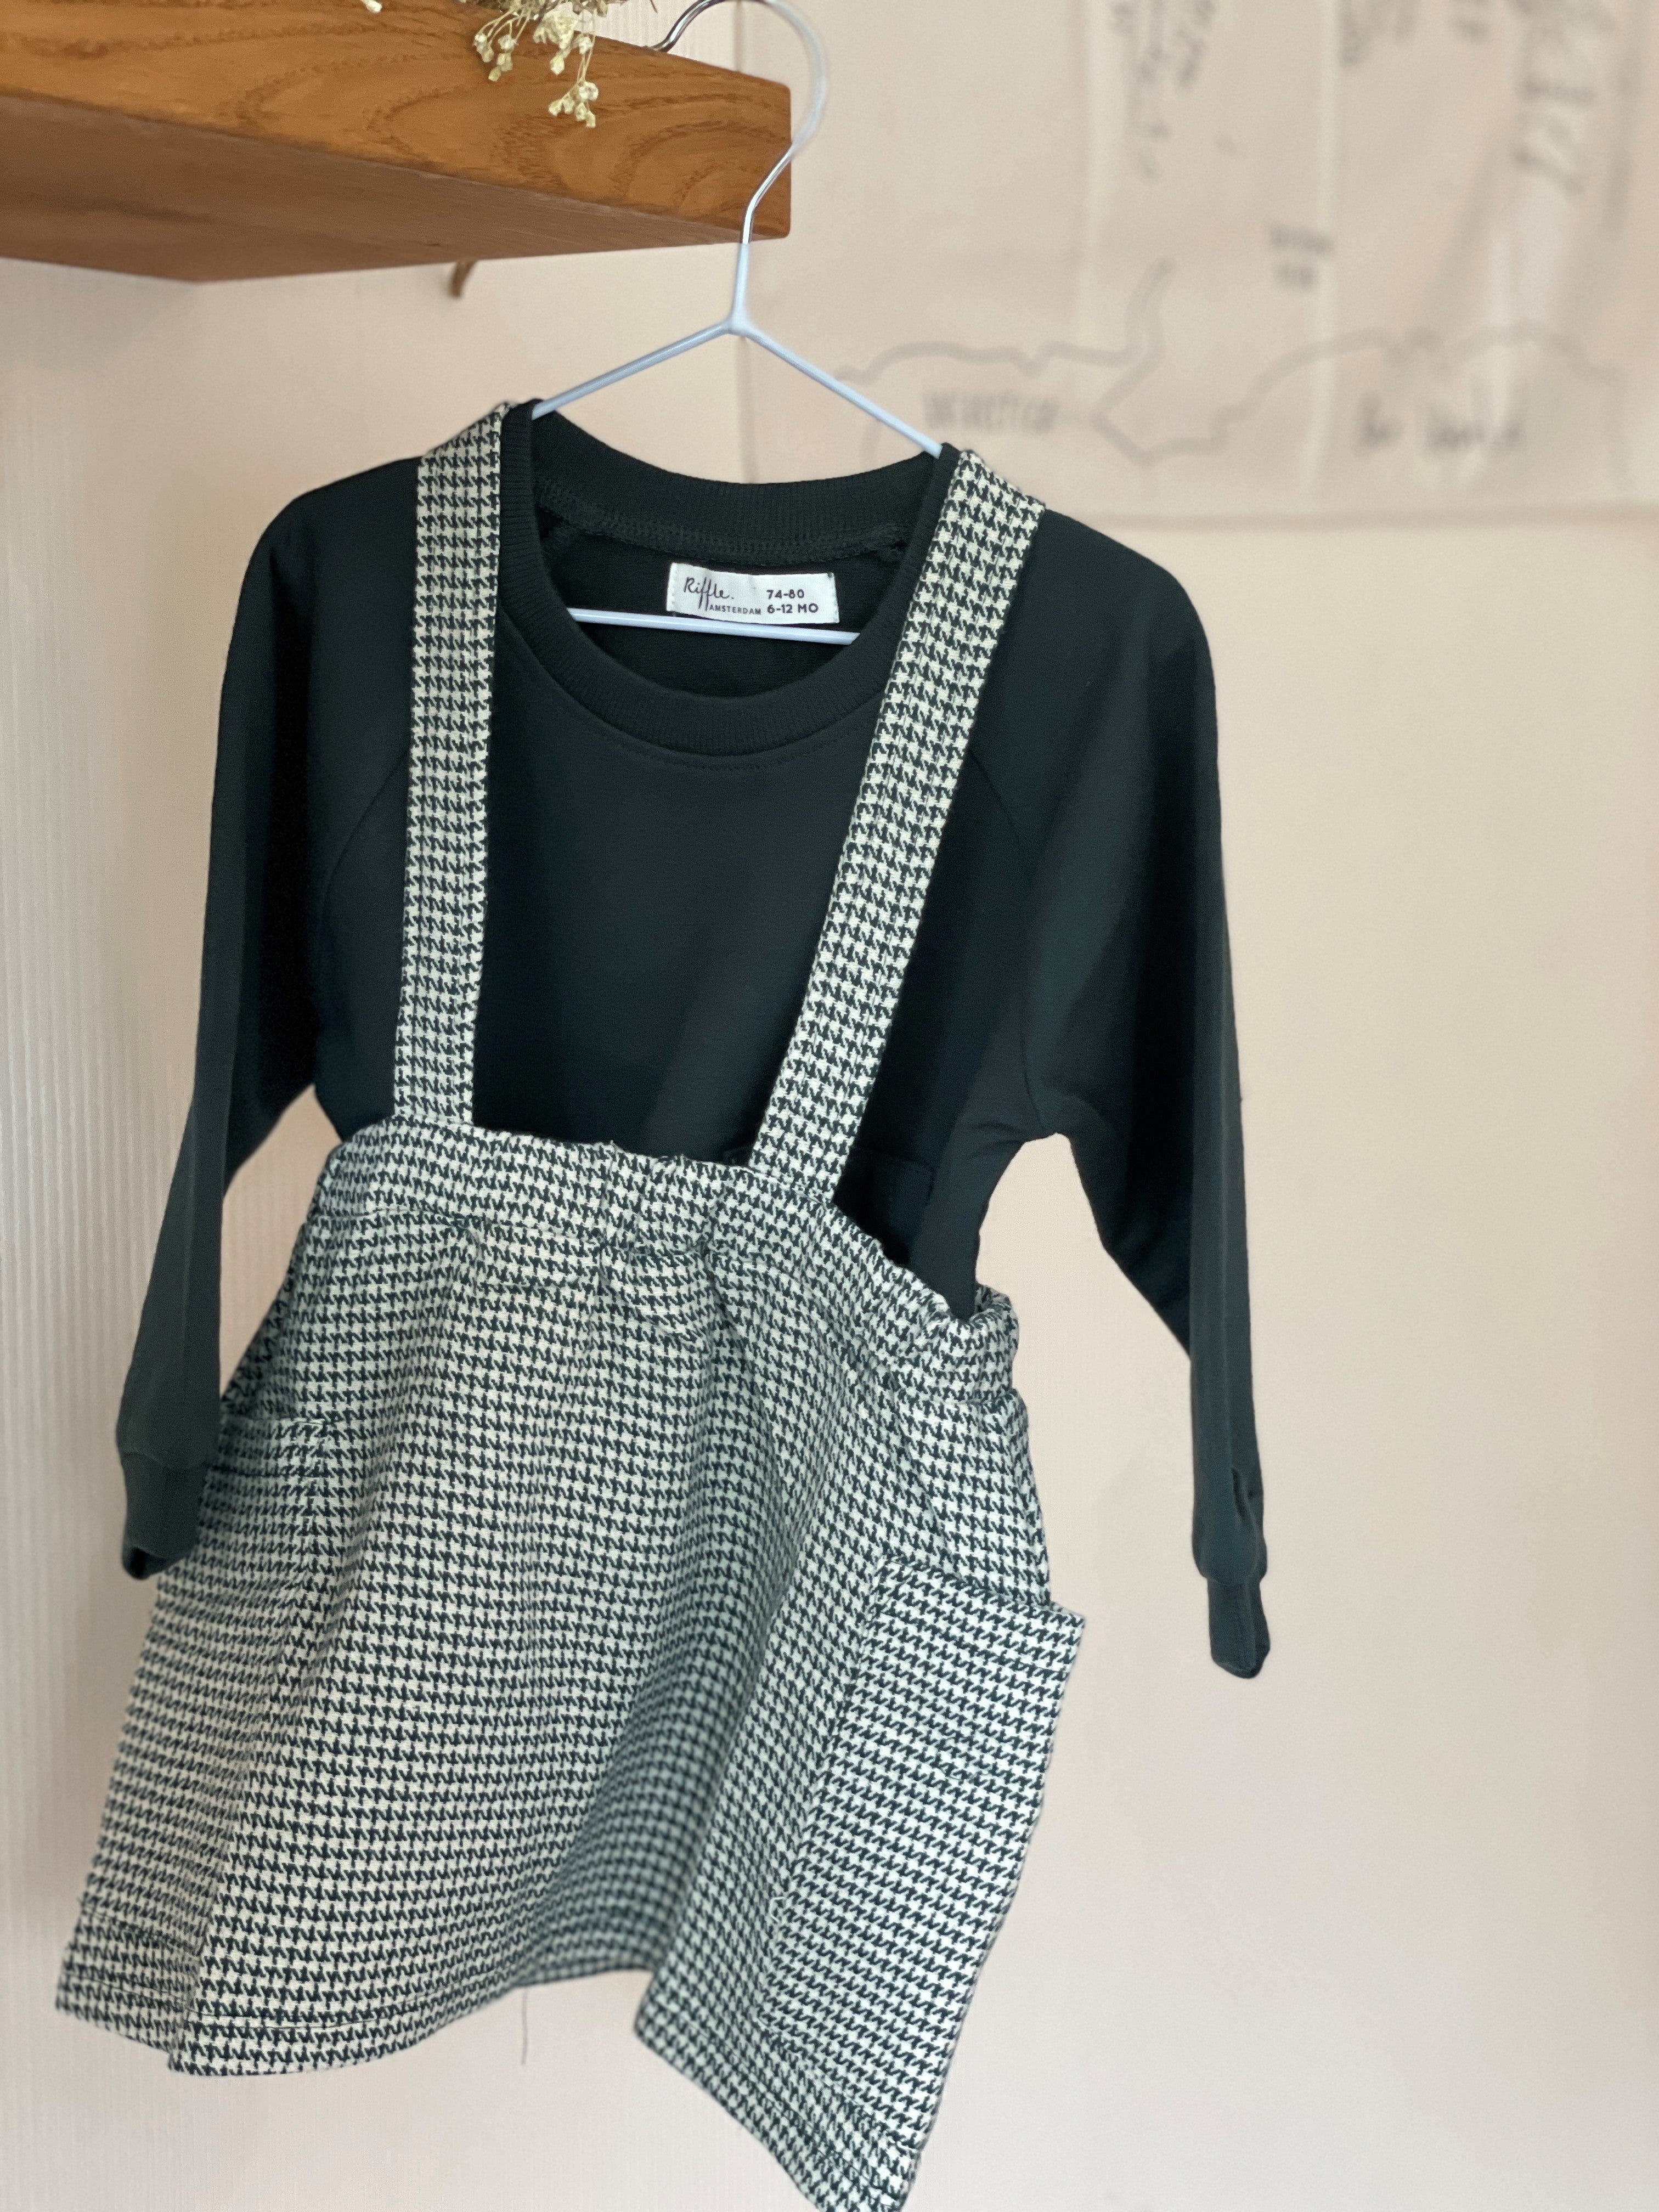 Skirt strap rosa - woven green square